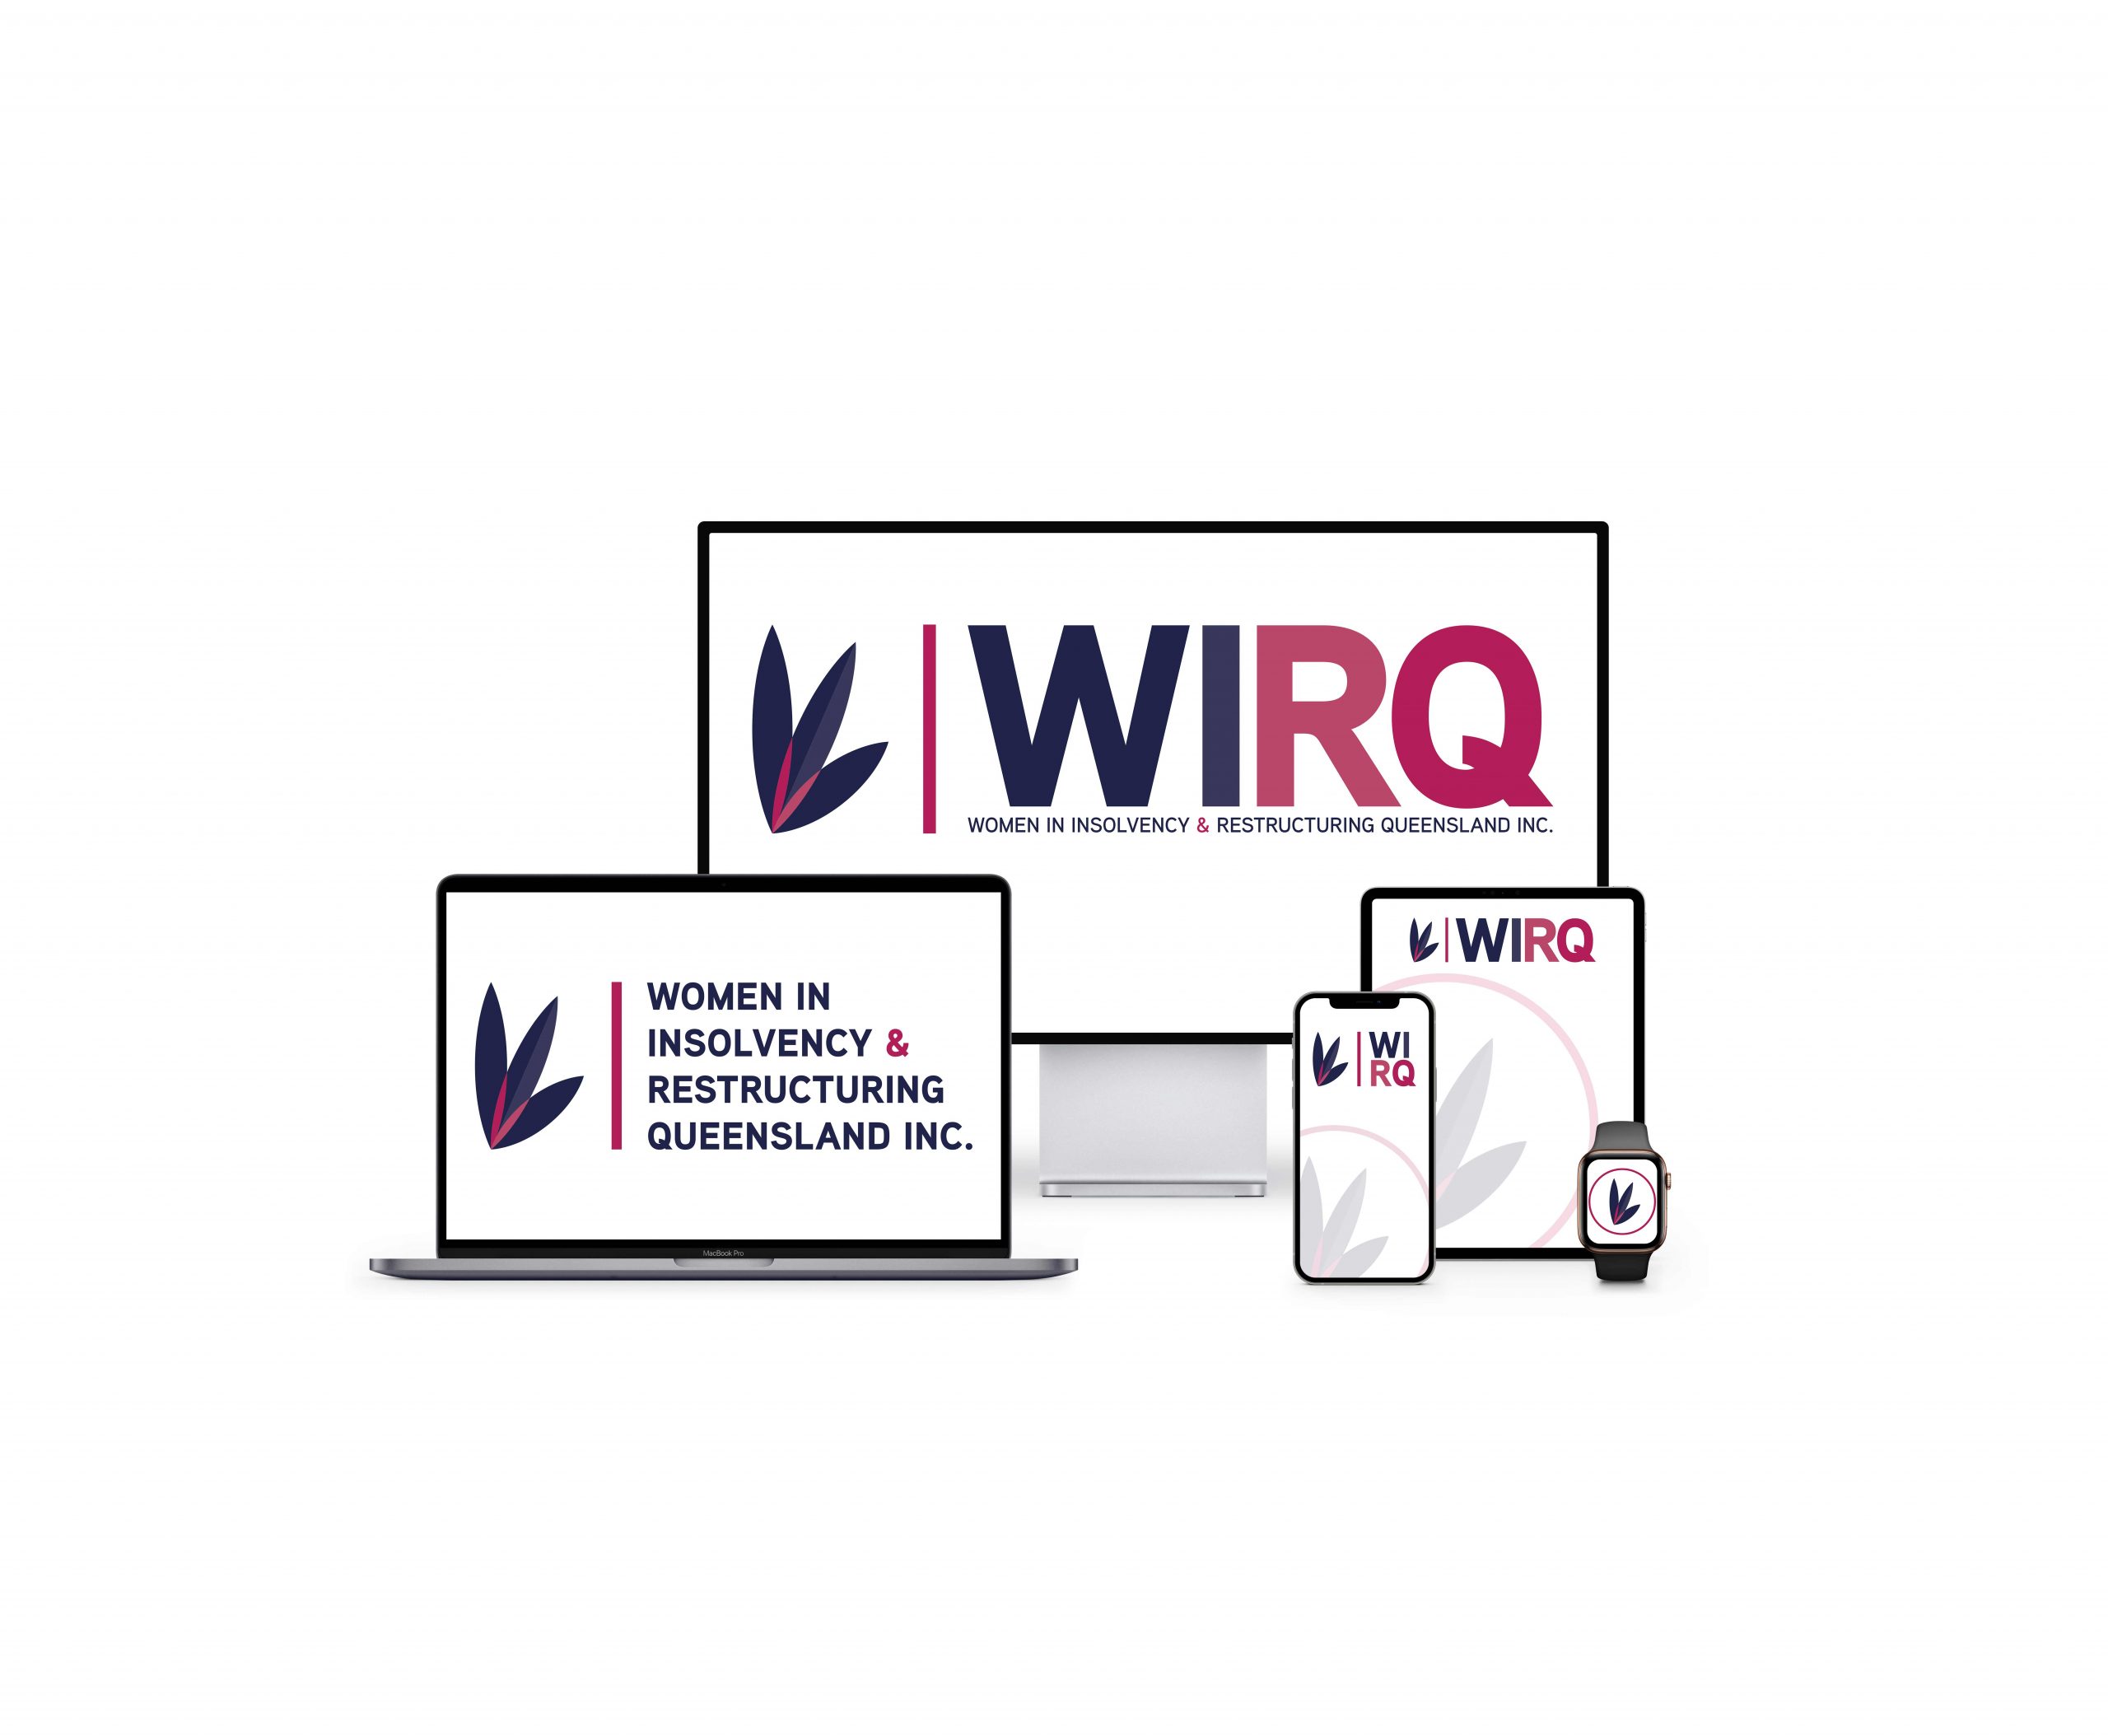 WIRQ logo mockup on all apple device screens